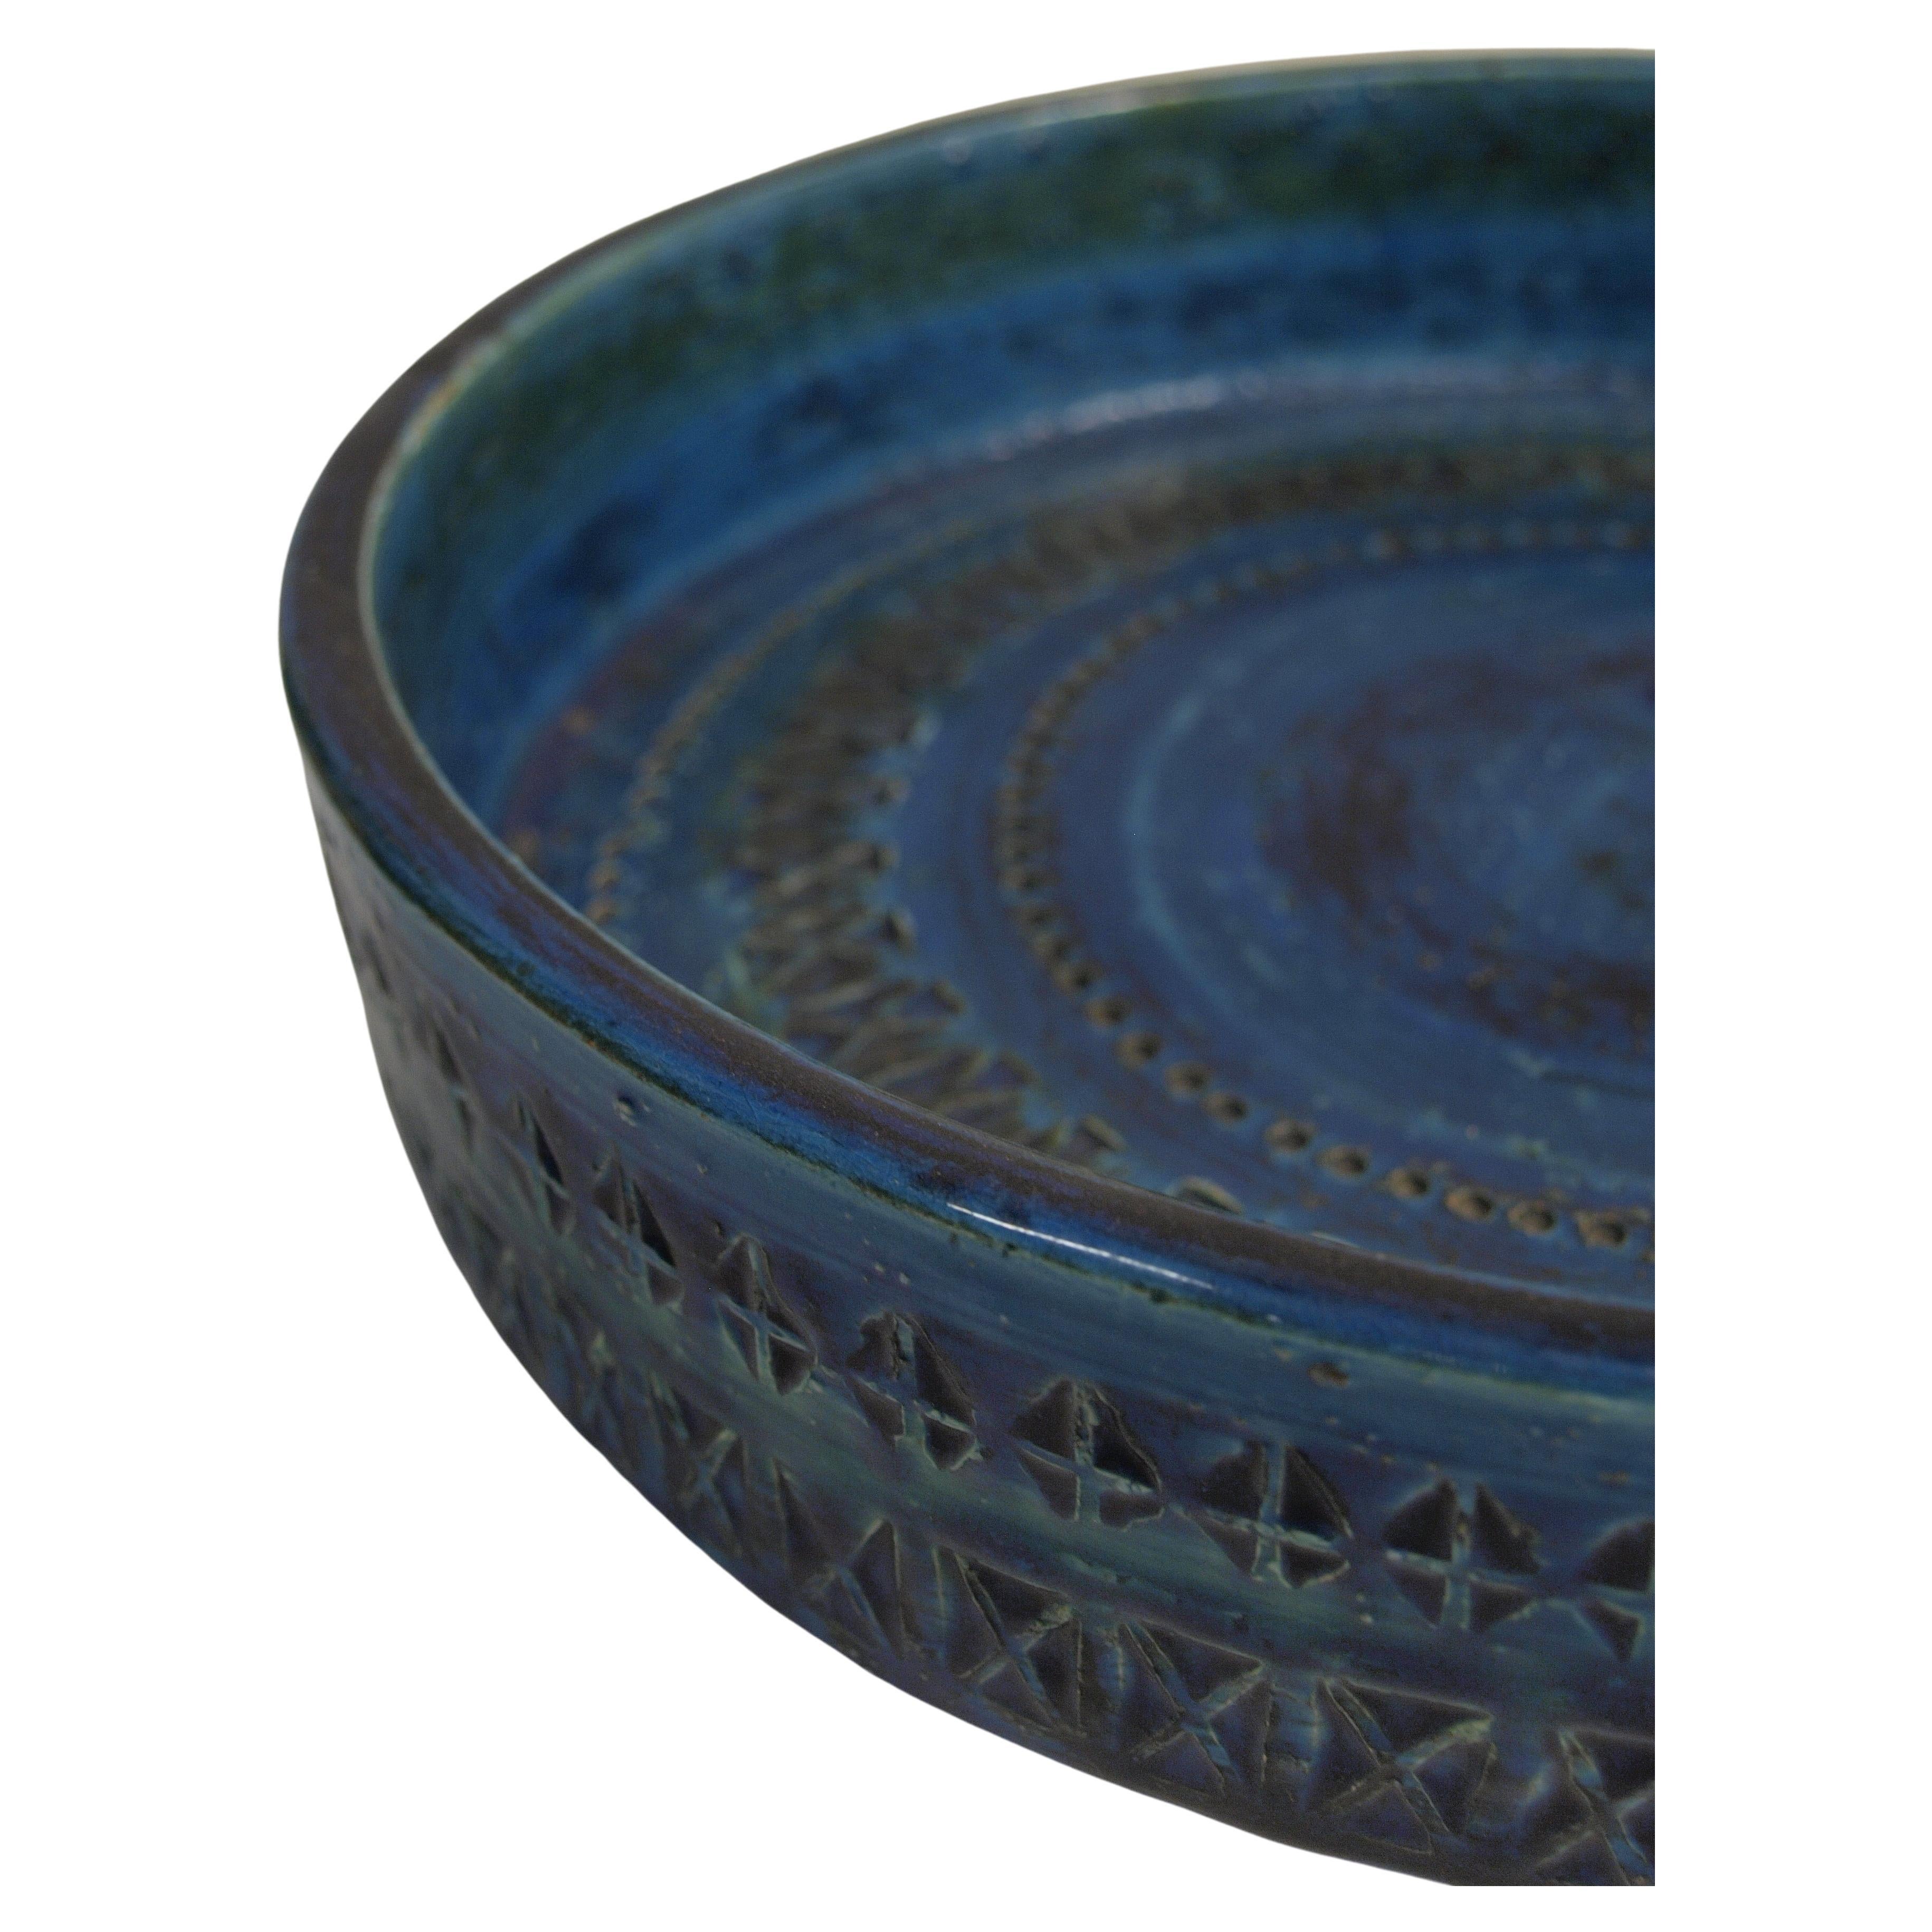 Aldo Londi Circular Ceramic Bowl, Blue Glazed, Bitossi, Mid-20th Century In Good Condition For Sale In Vienna, AT